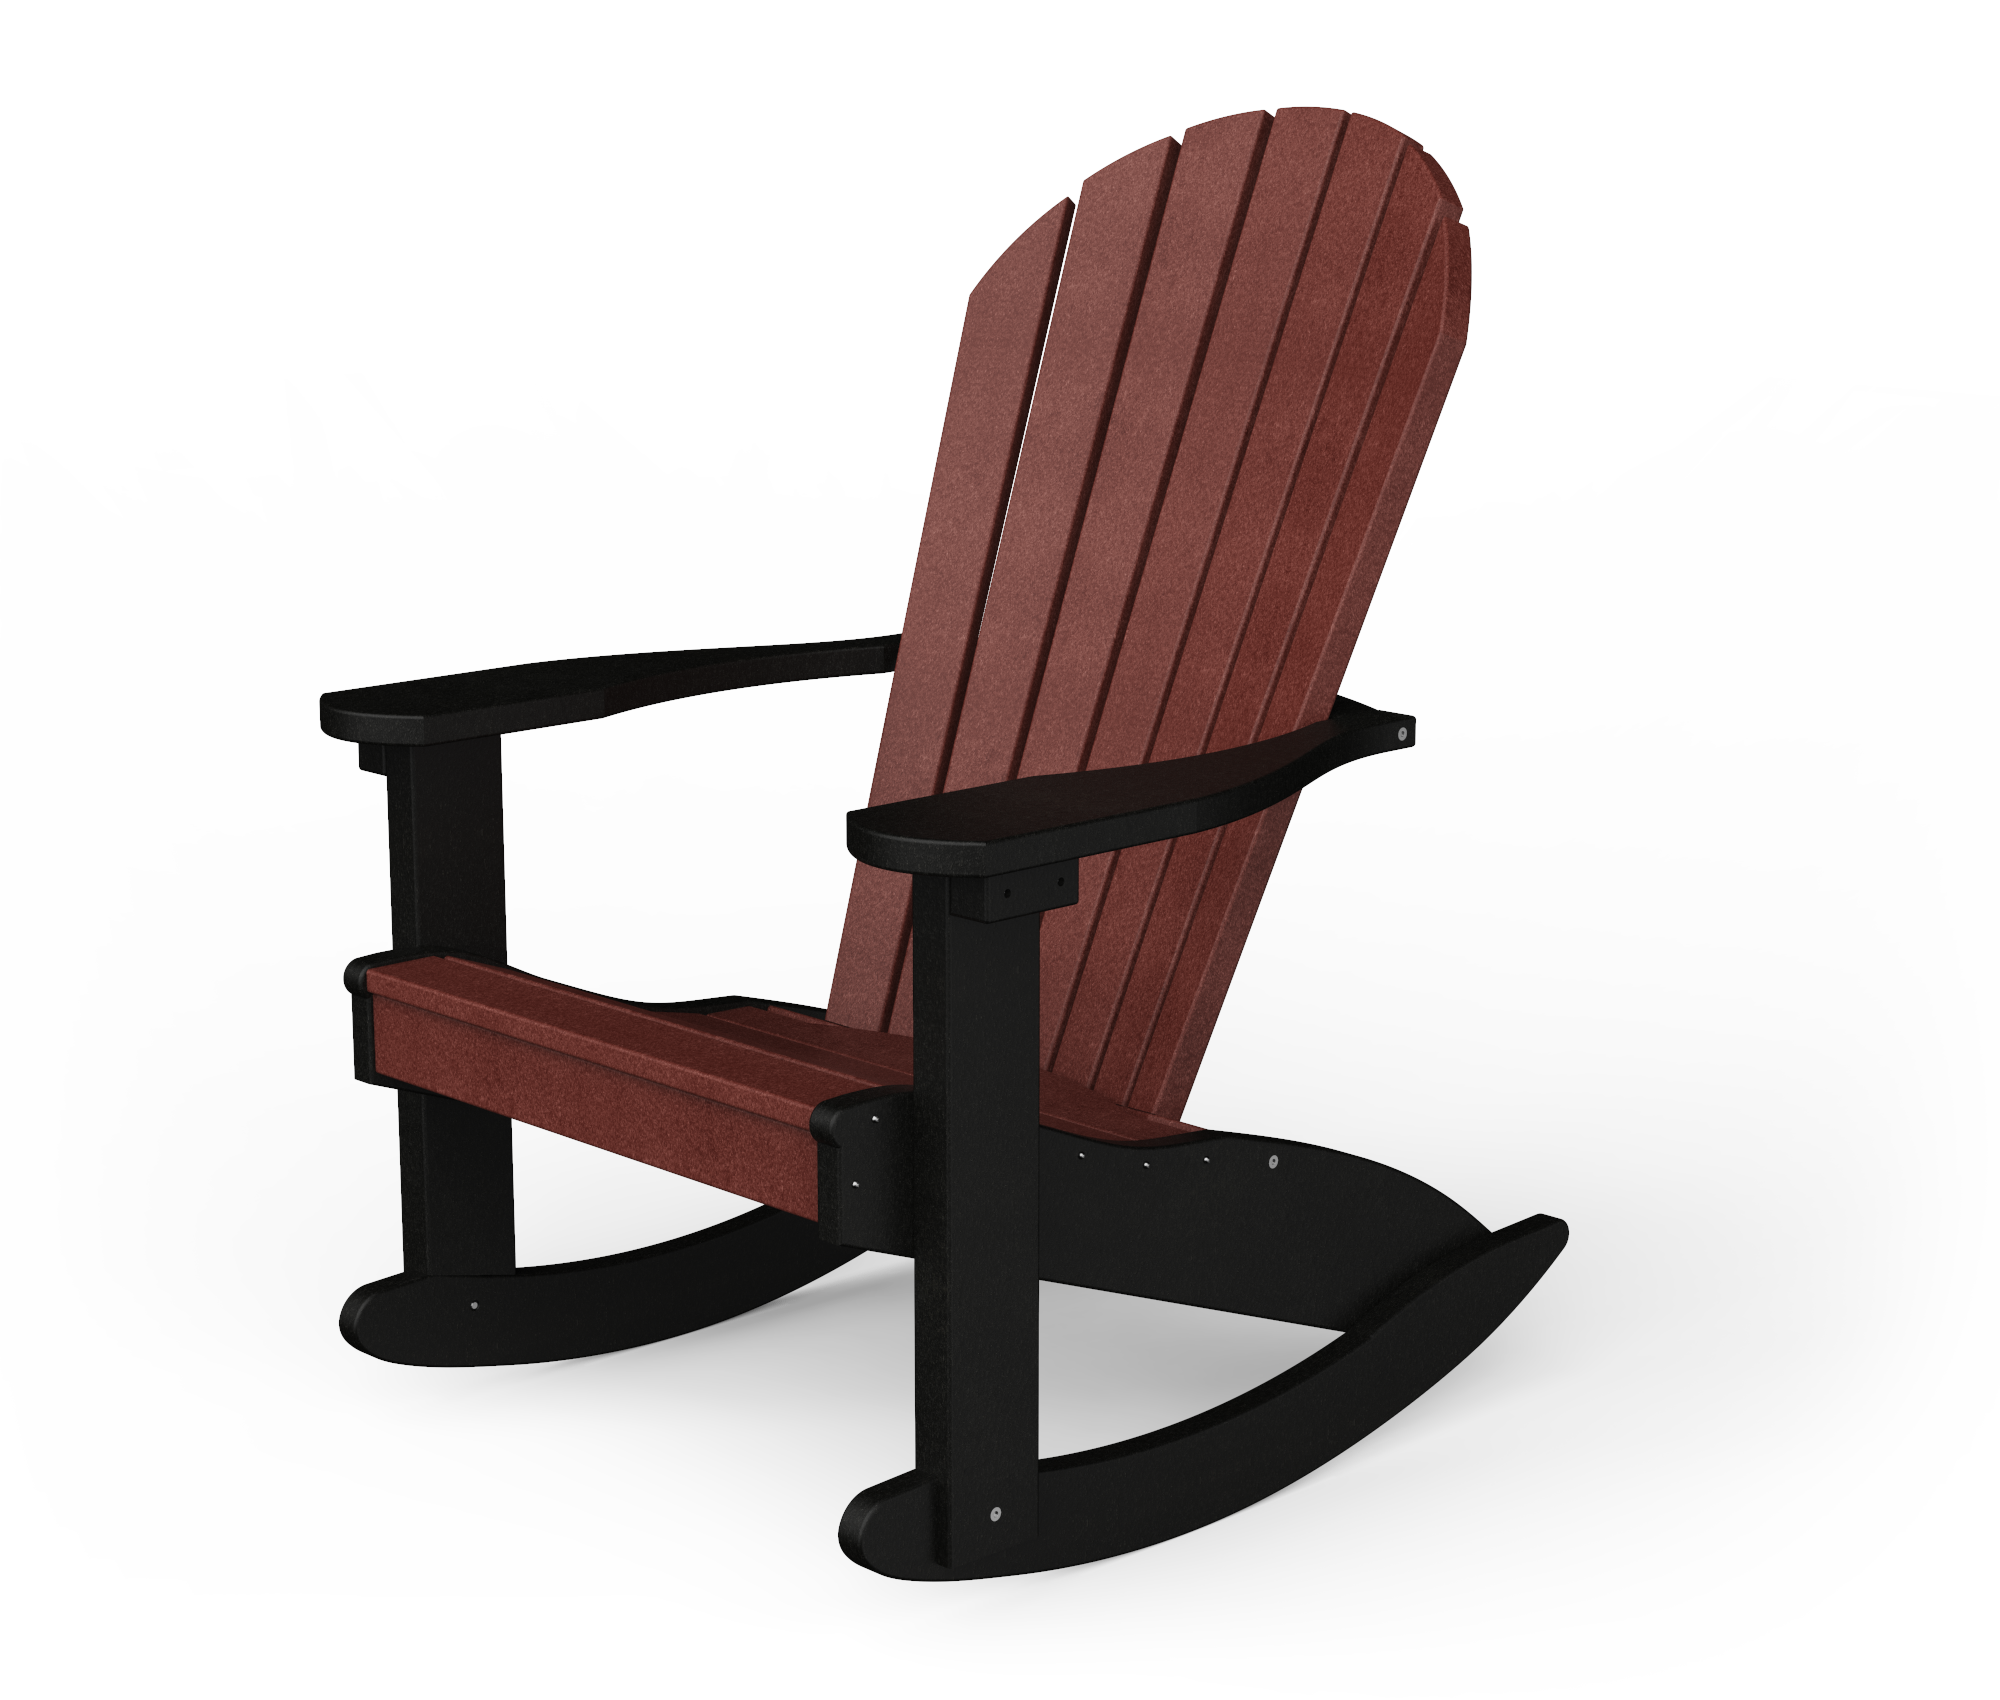 Poly Adirondack rocking chair.